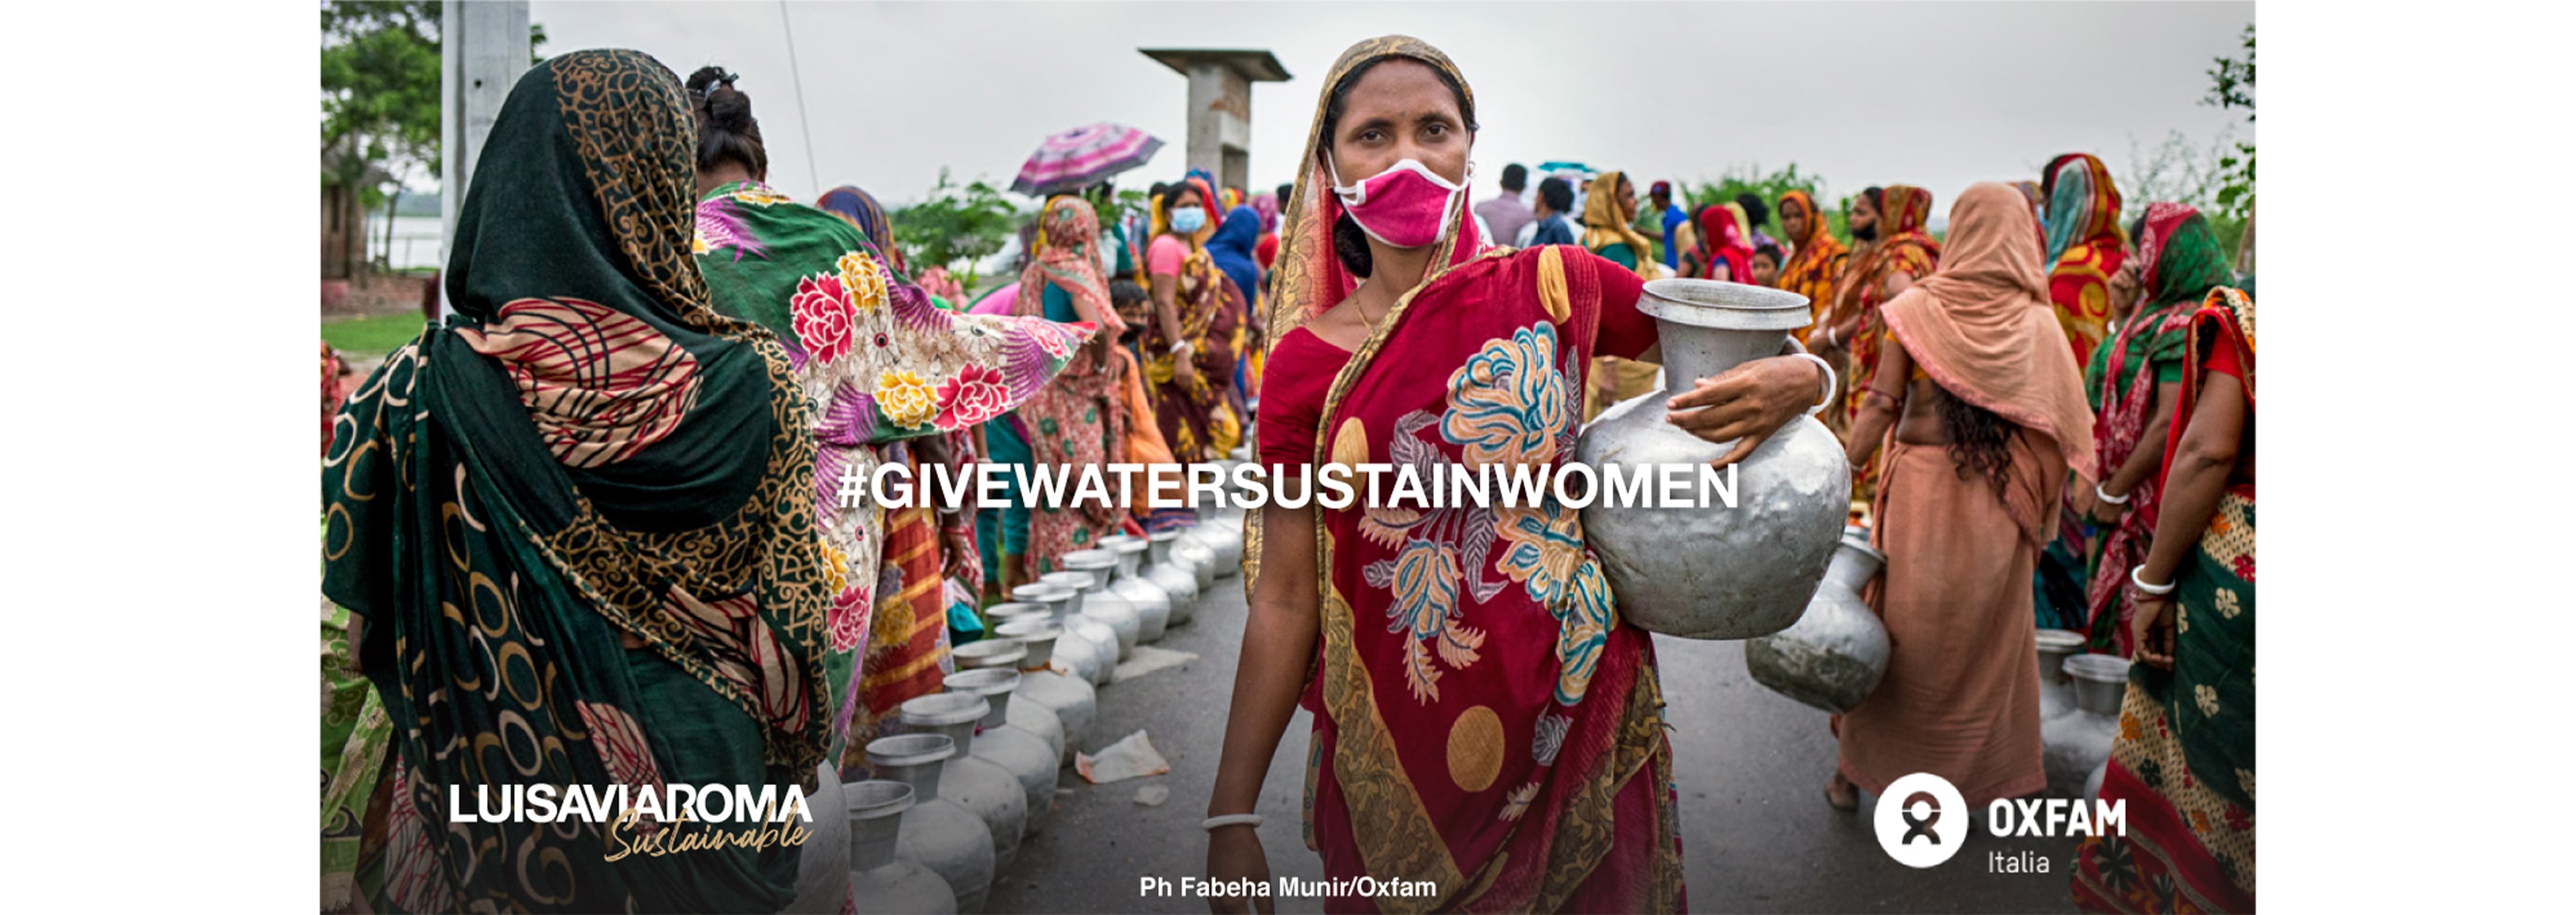 LVRSustainable & Oxfam Italia, insieme per Give Water, Sustain Women: la storia di Dorothy